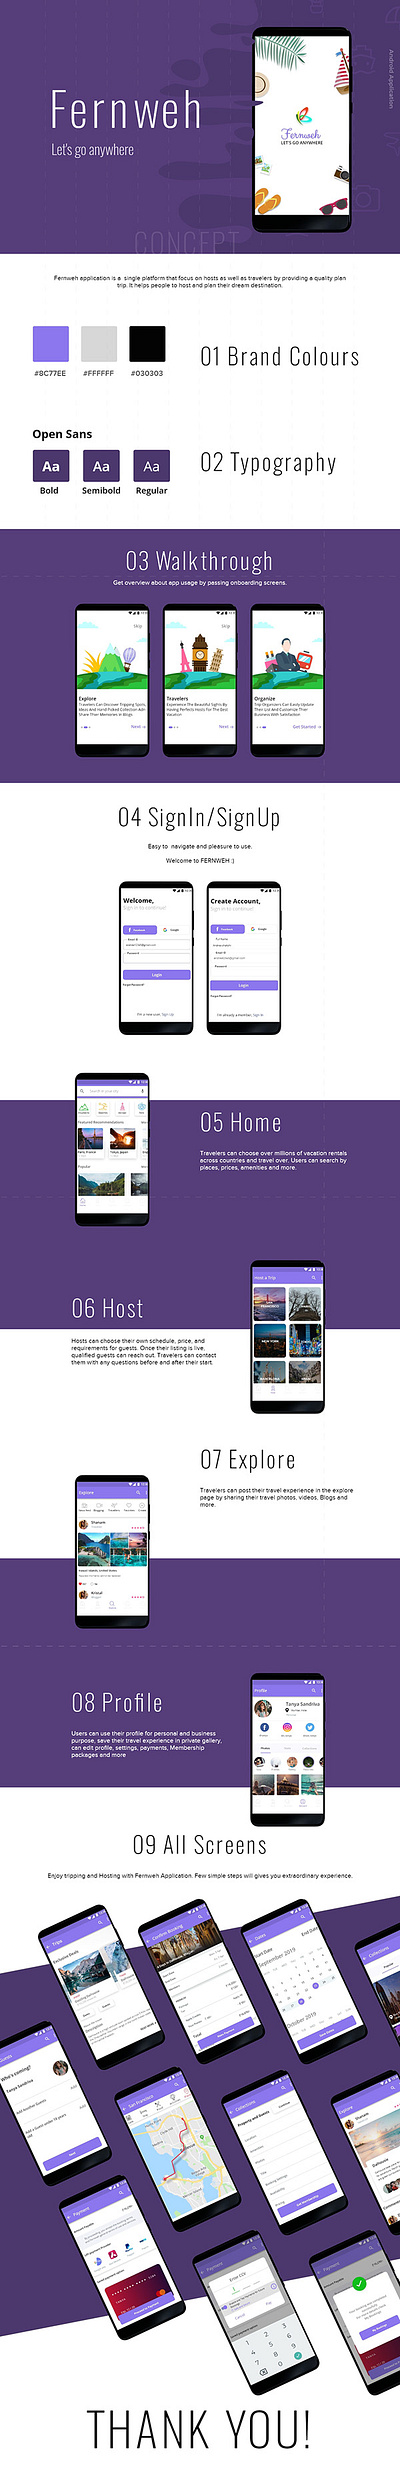 Complete design of Fernweh - A travel app app layout uiux website